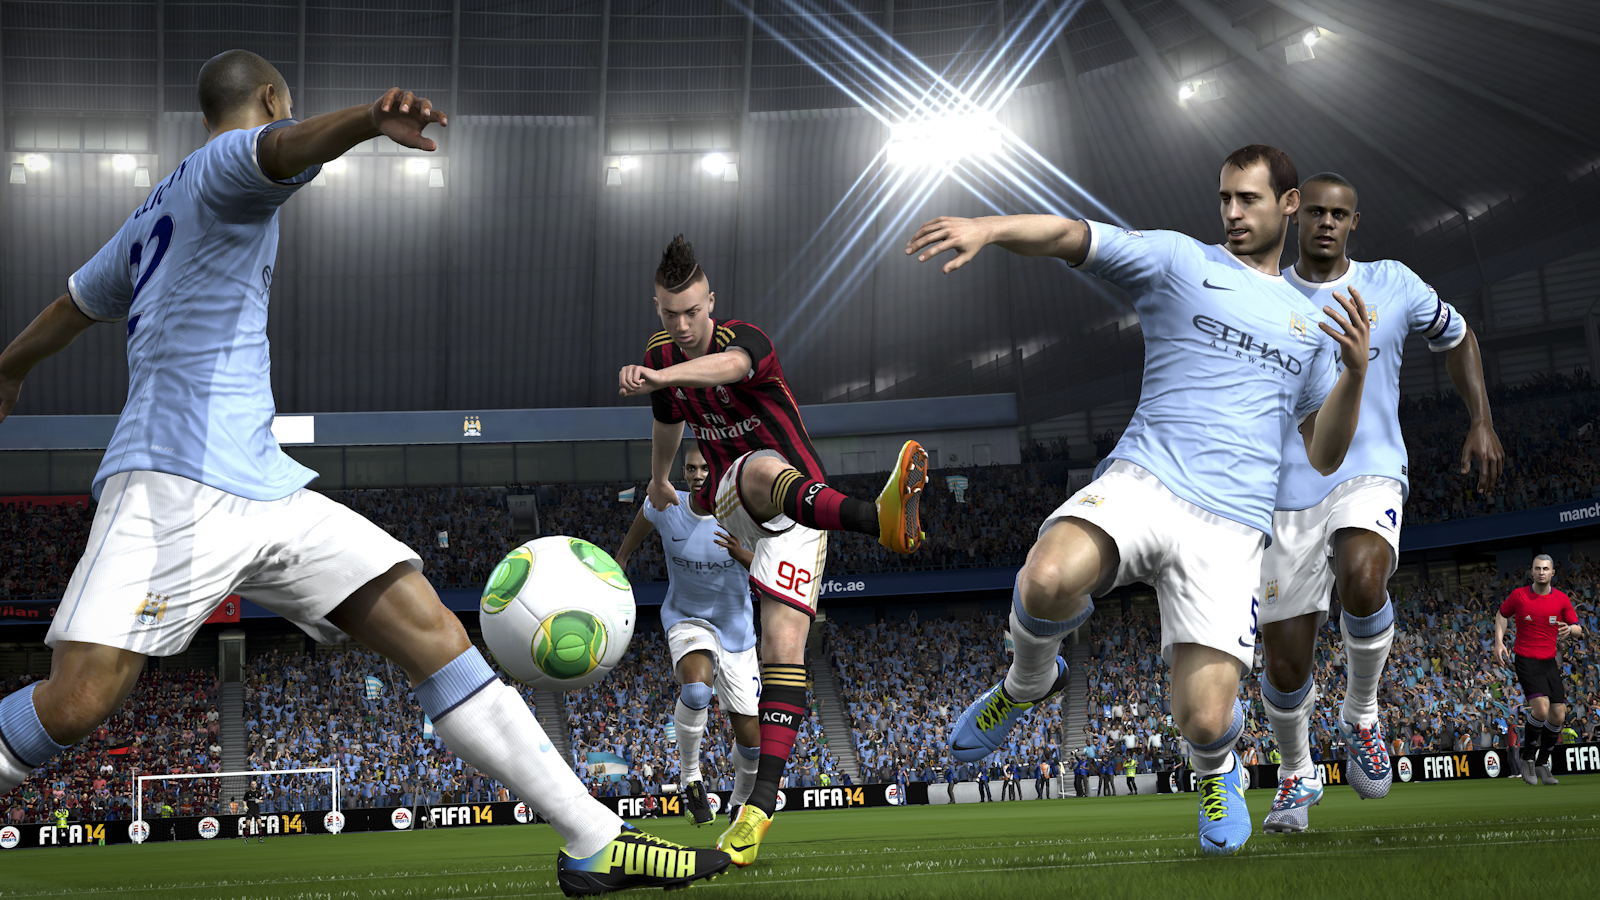 Игра для ps4:FIFA 14. FIFA 14 PLAYSTATION. ФИФА 14 на ПС 4. PLAYSTATION 3 FIFA 14. Включи 14 0 0